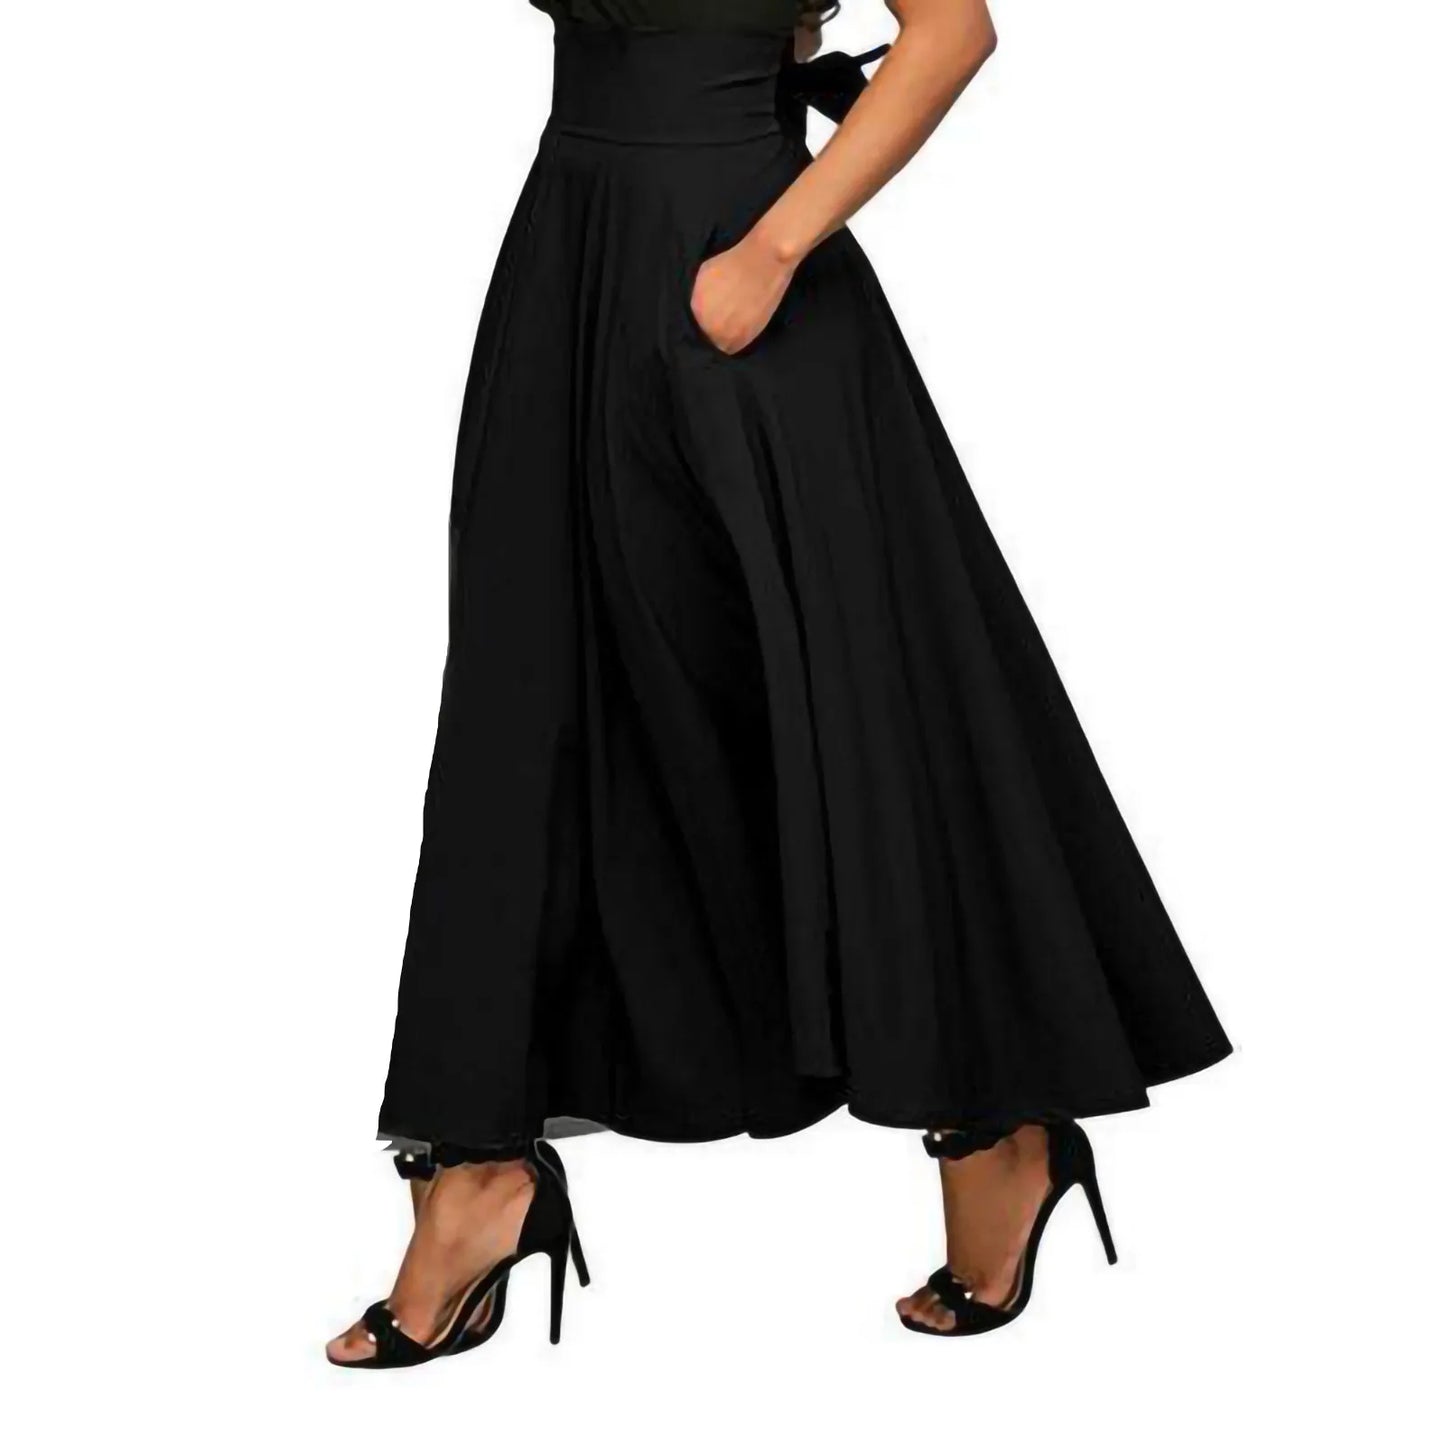 Falda larga elegante negra